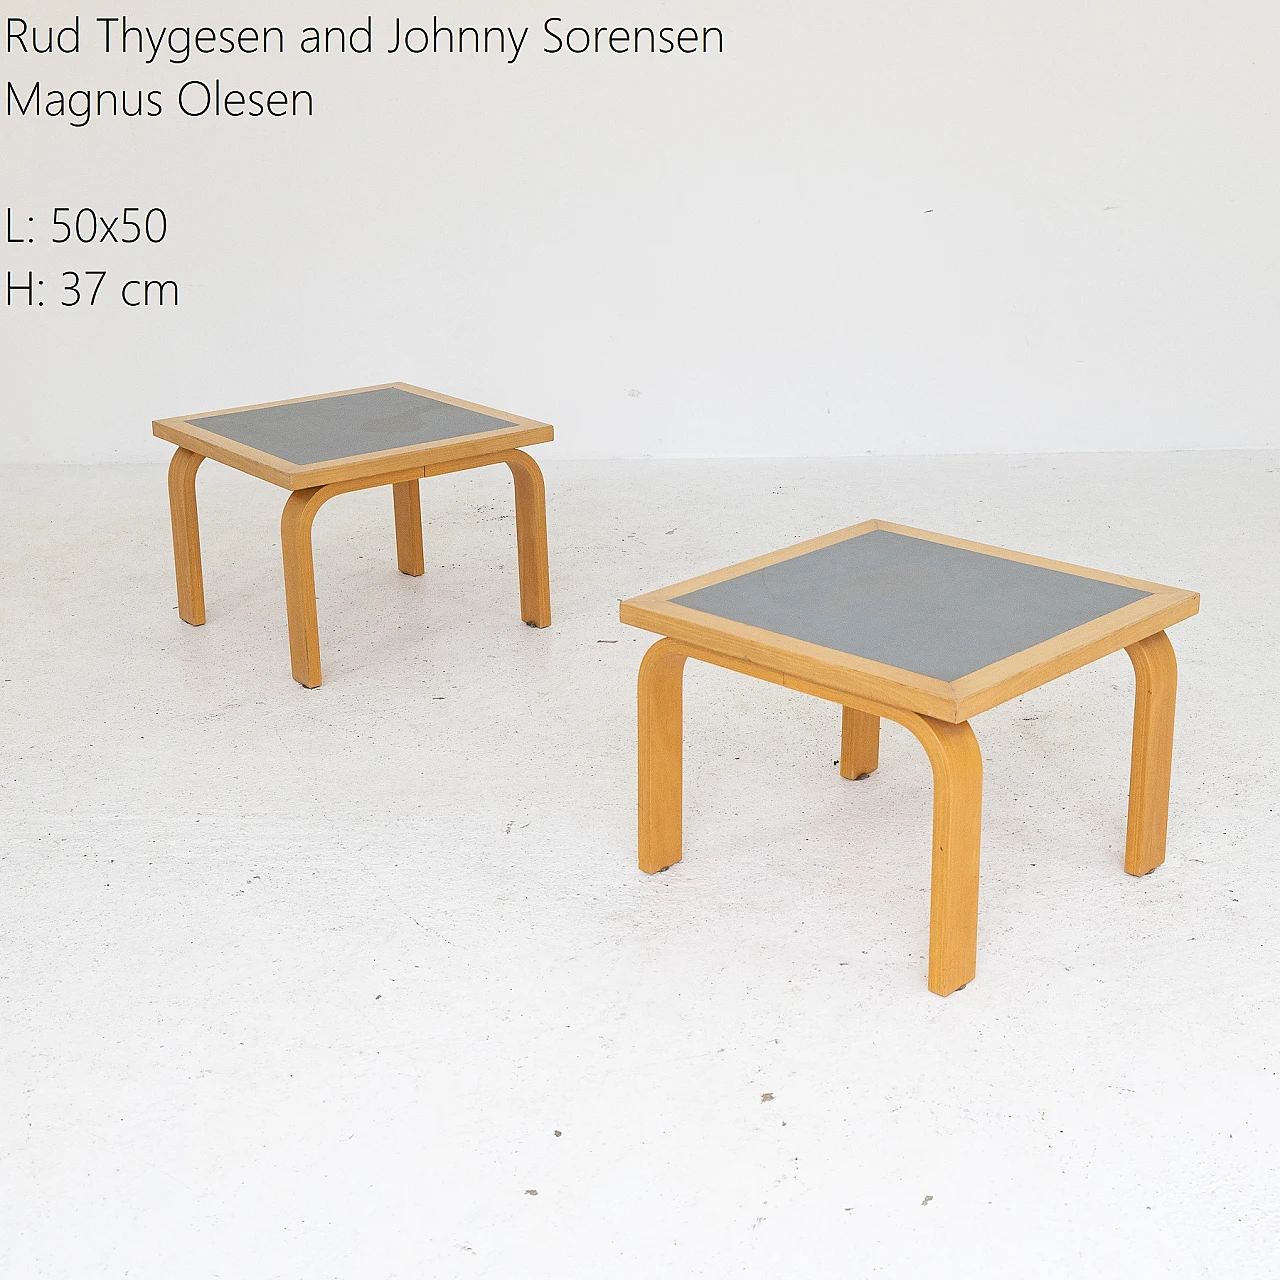 Pair of coffee tables by Thygesen & Sorensen for Magnus Olesen, 1980s 1